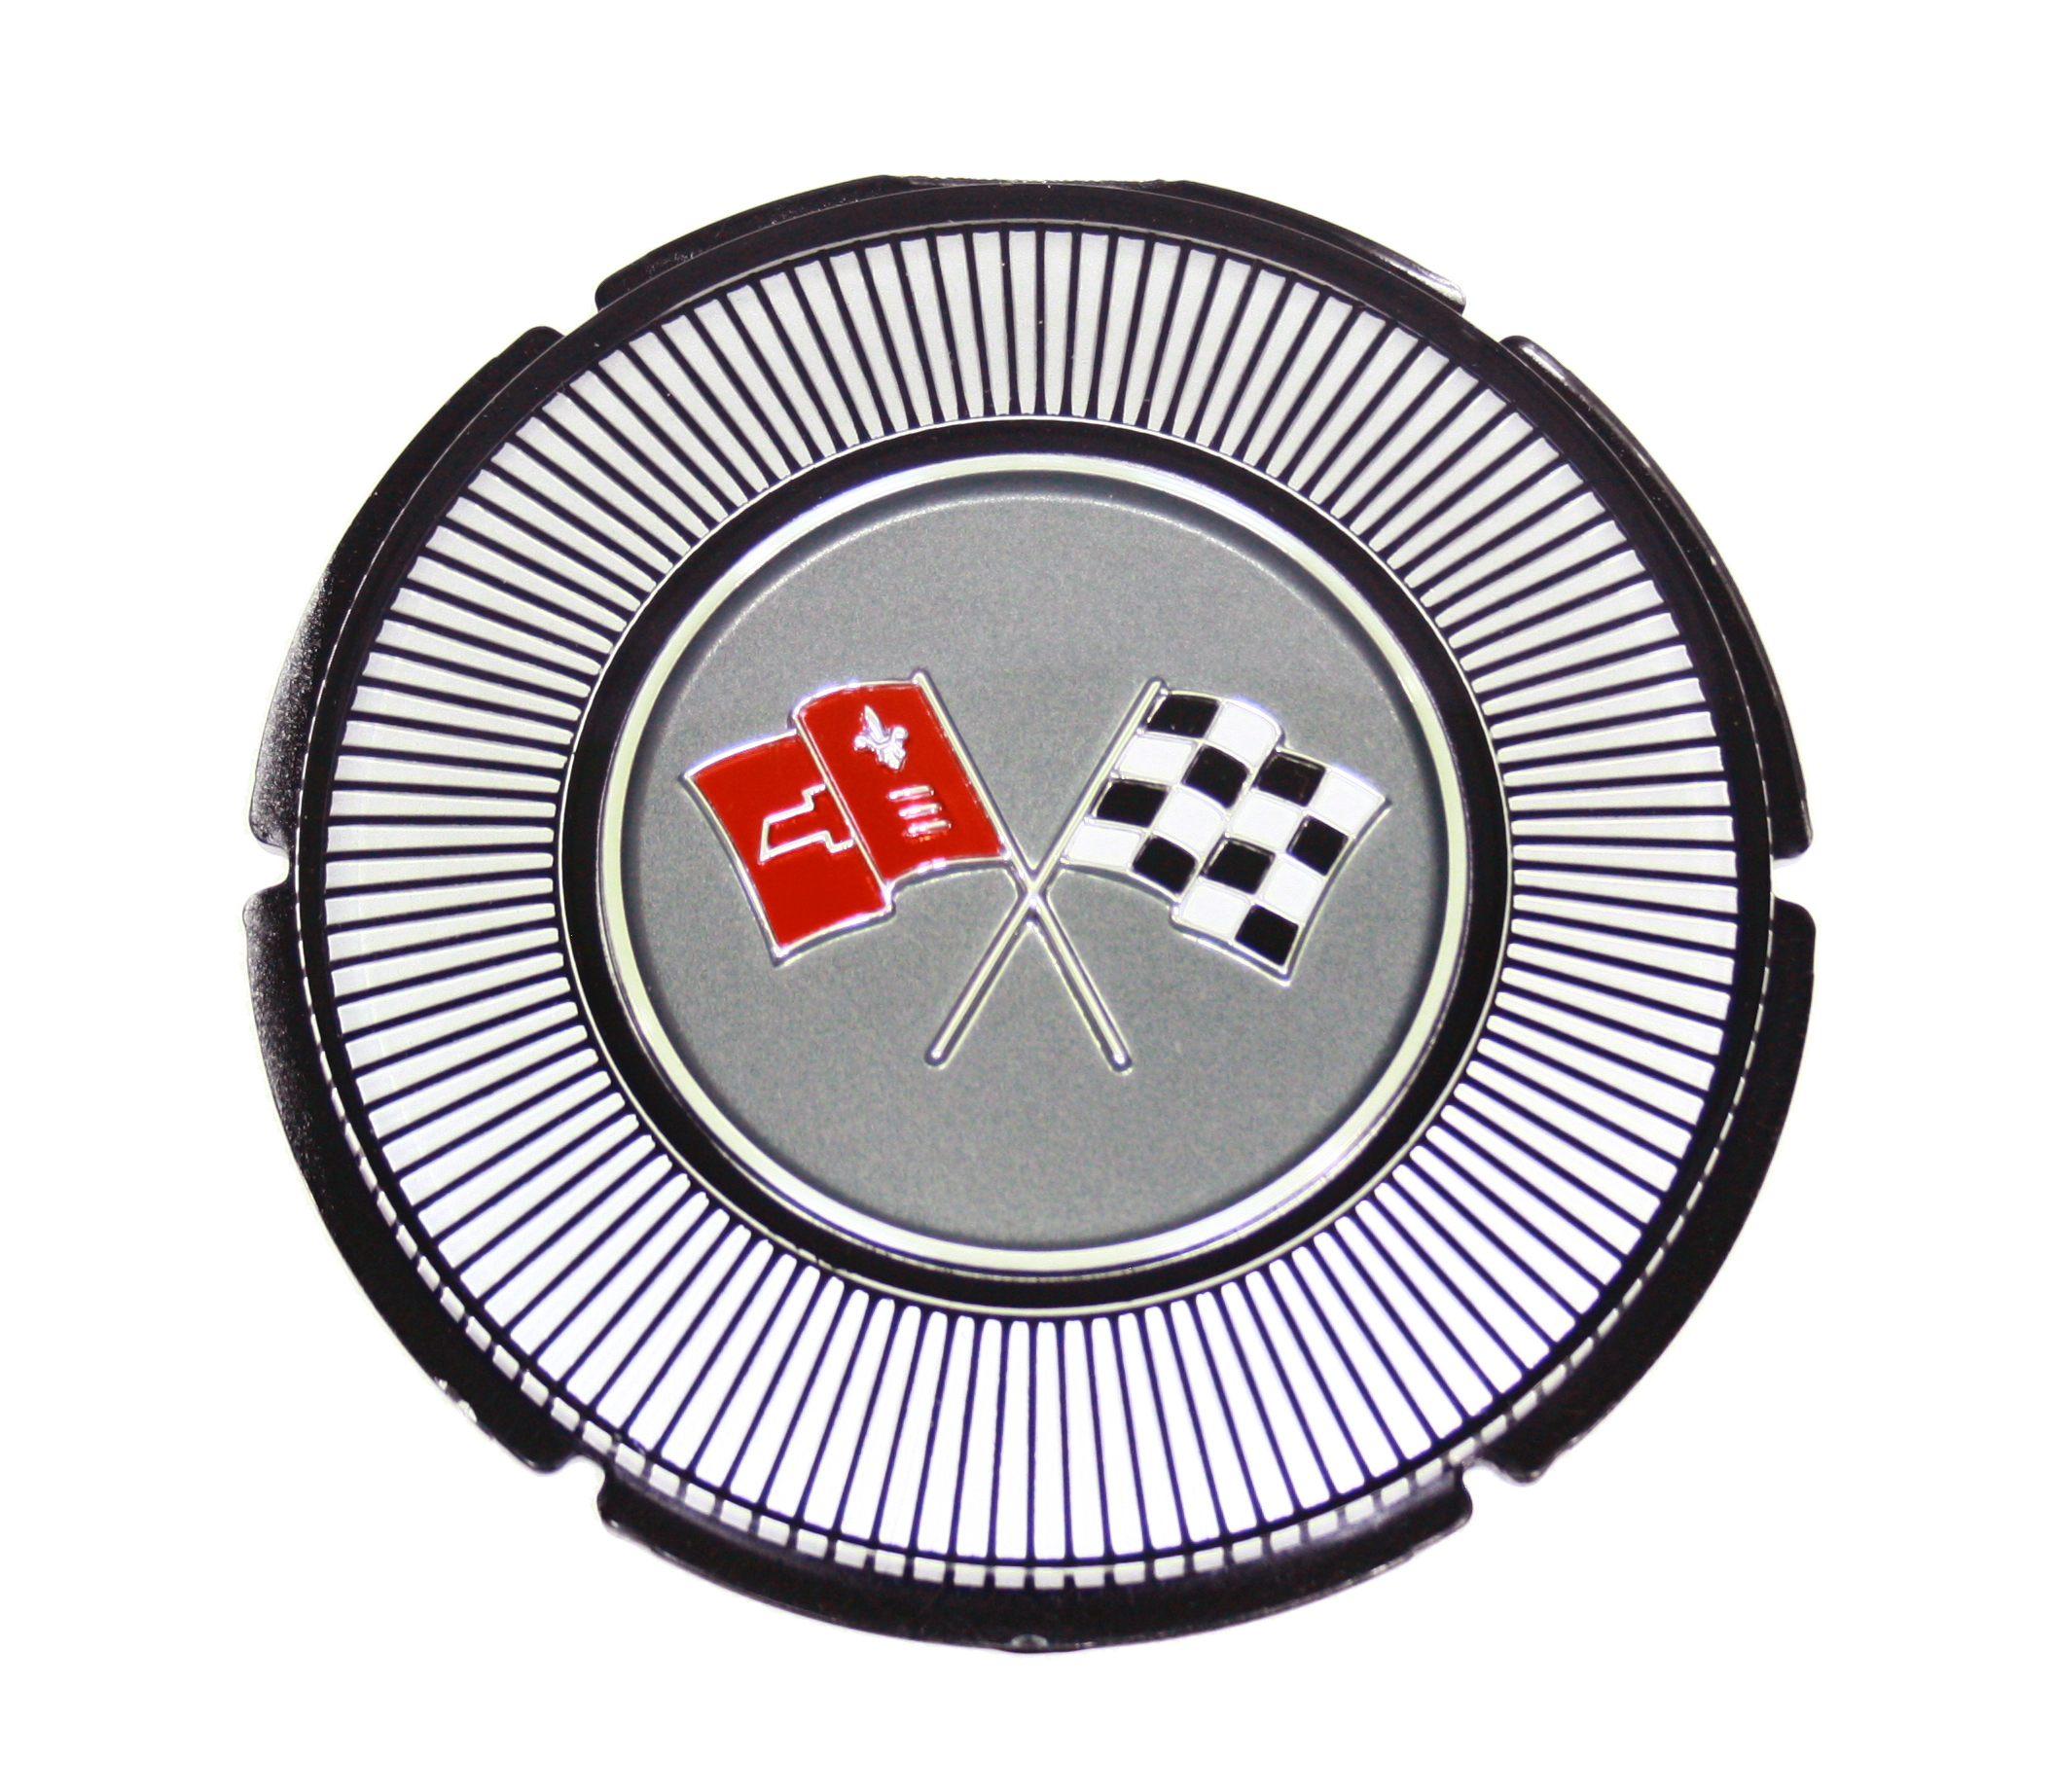 1966 Corvette Gas Door Emblem - Crossed Flags